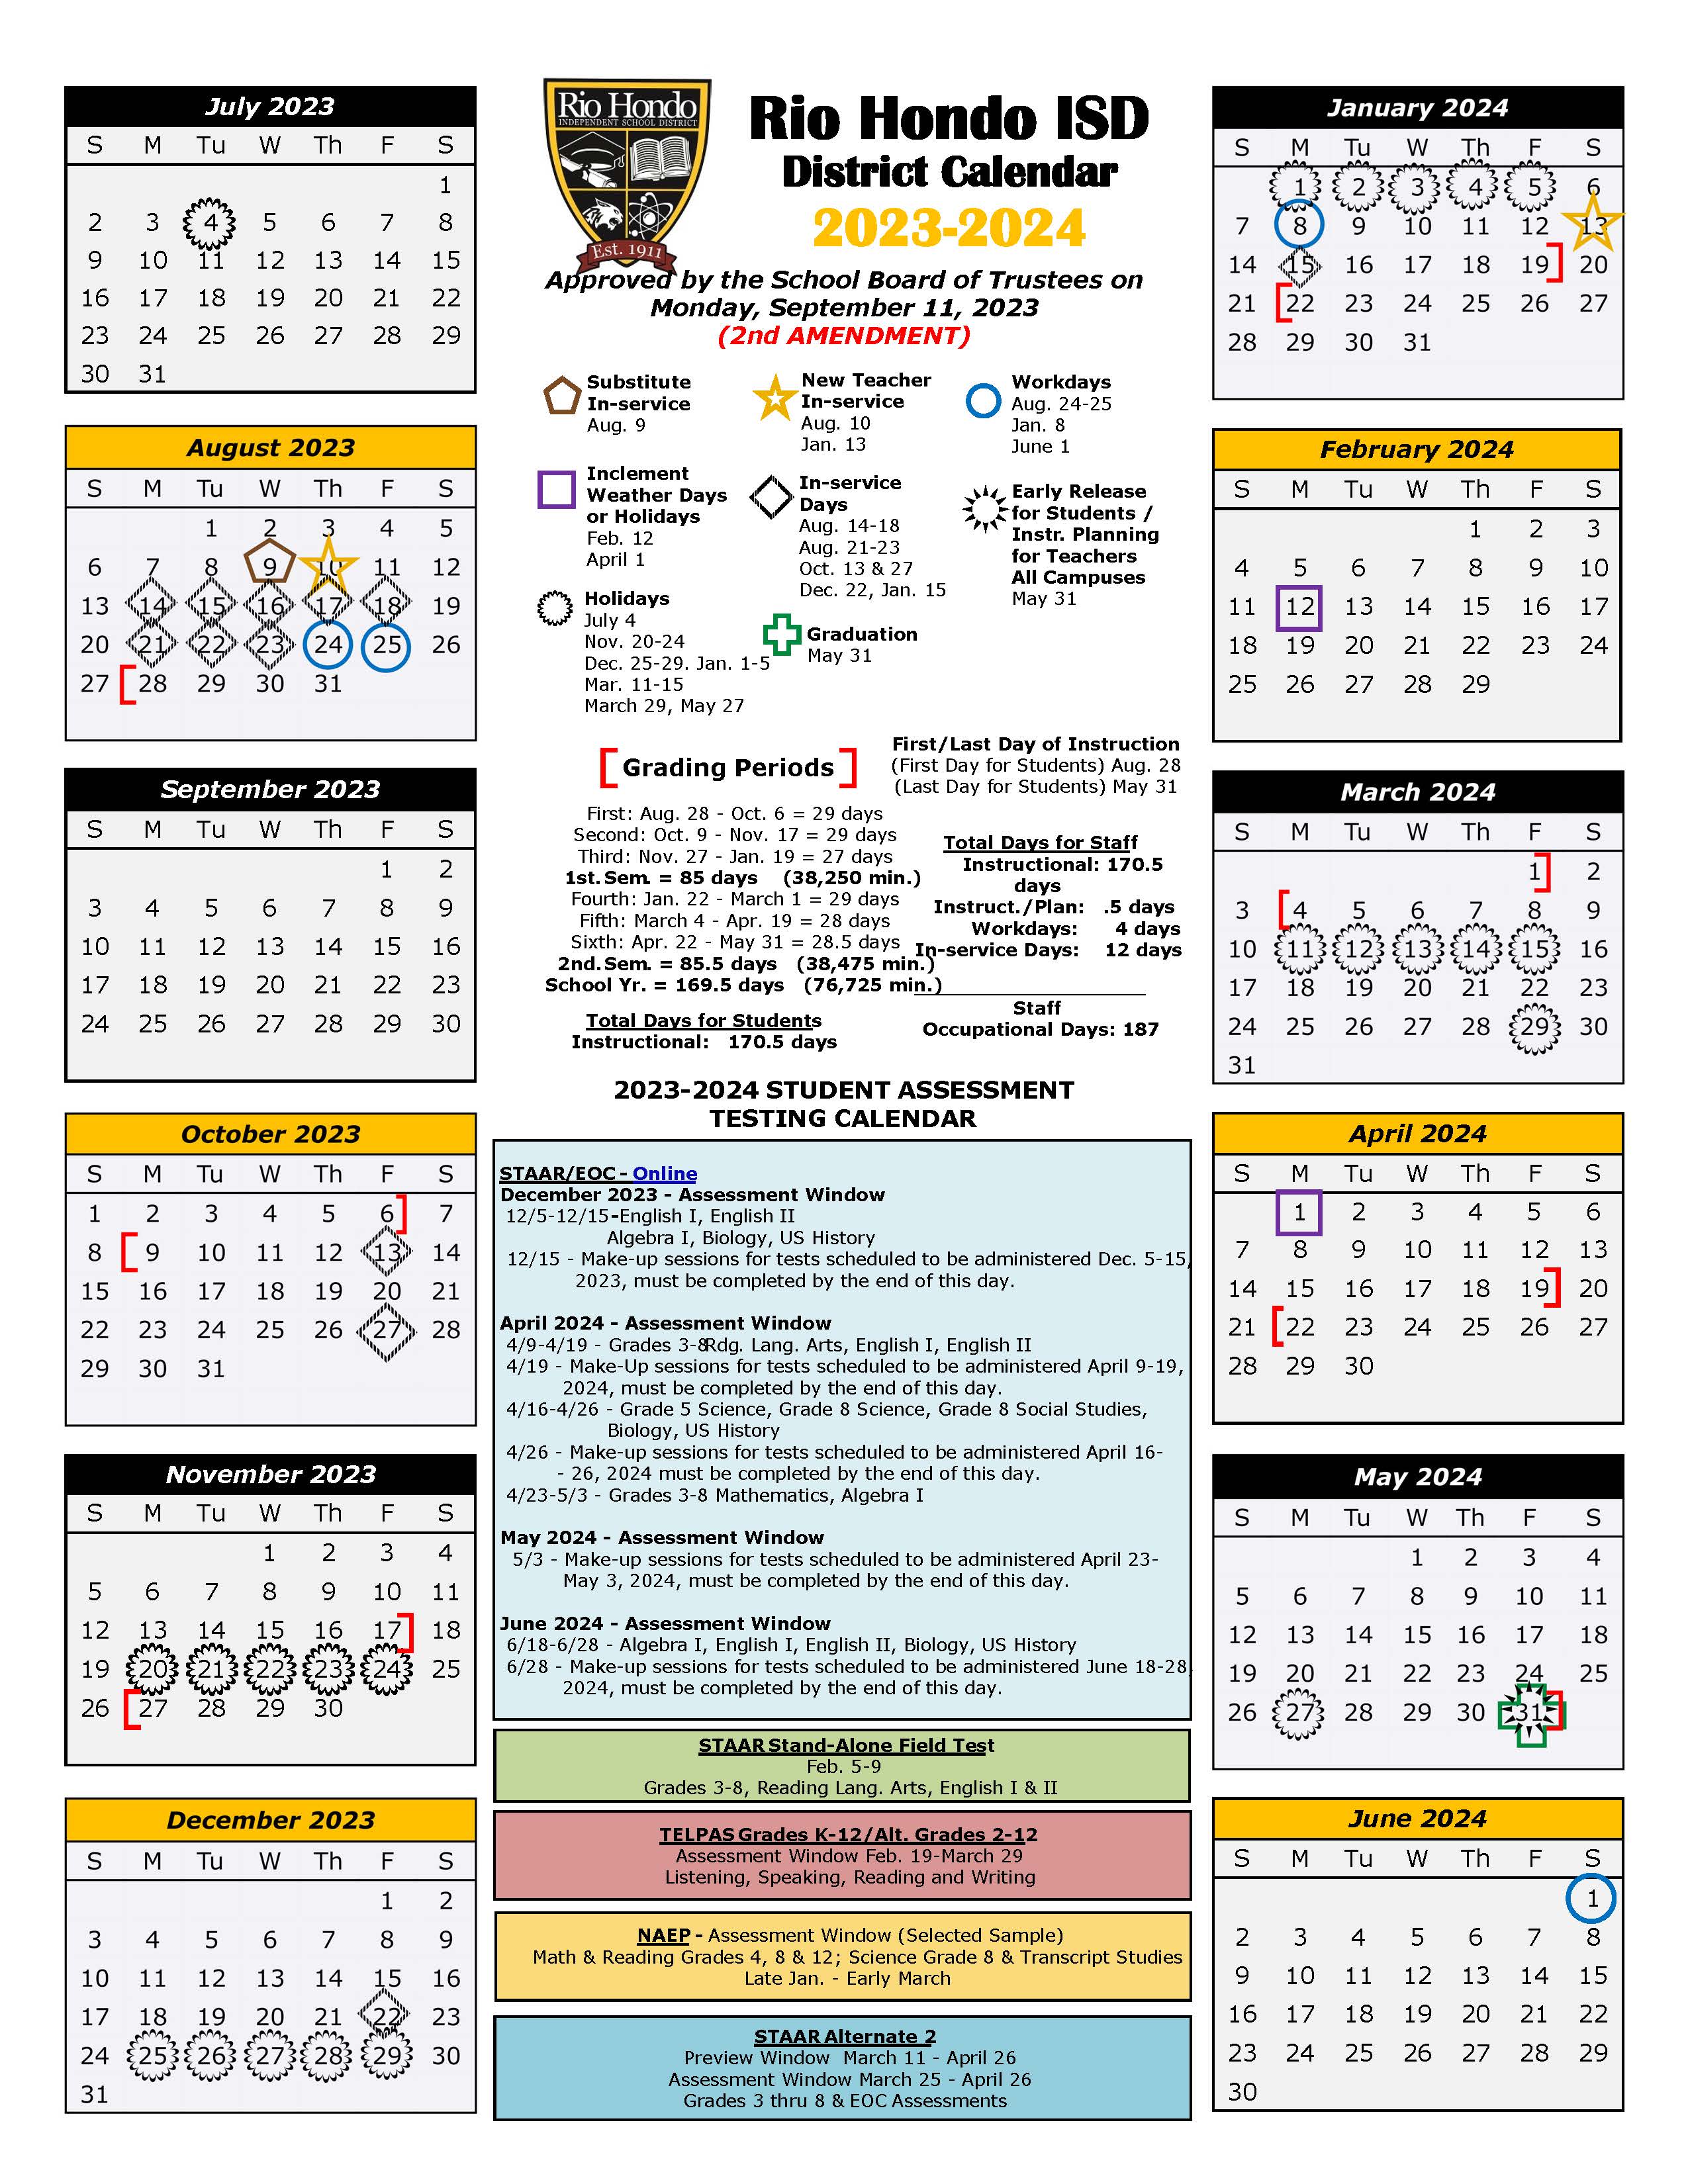 RHISD 2023-2024 School Calendar